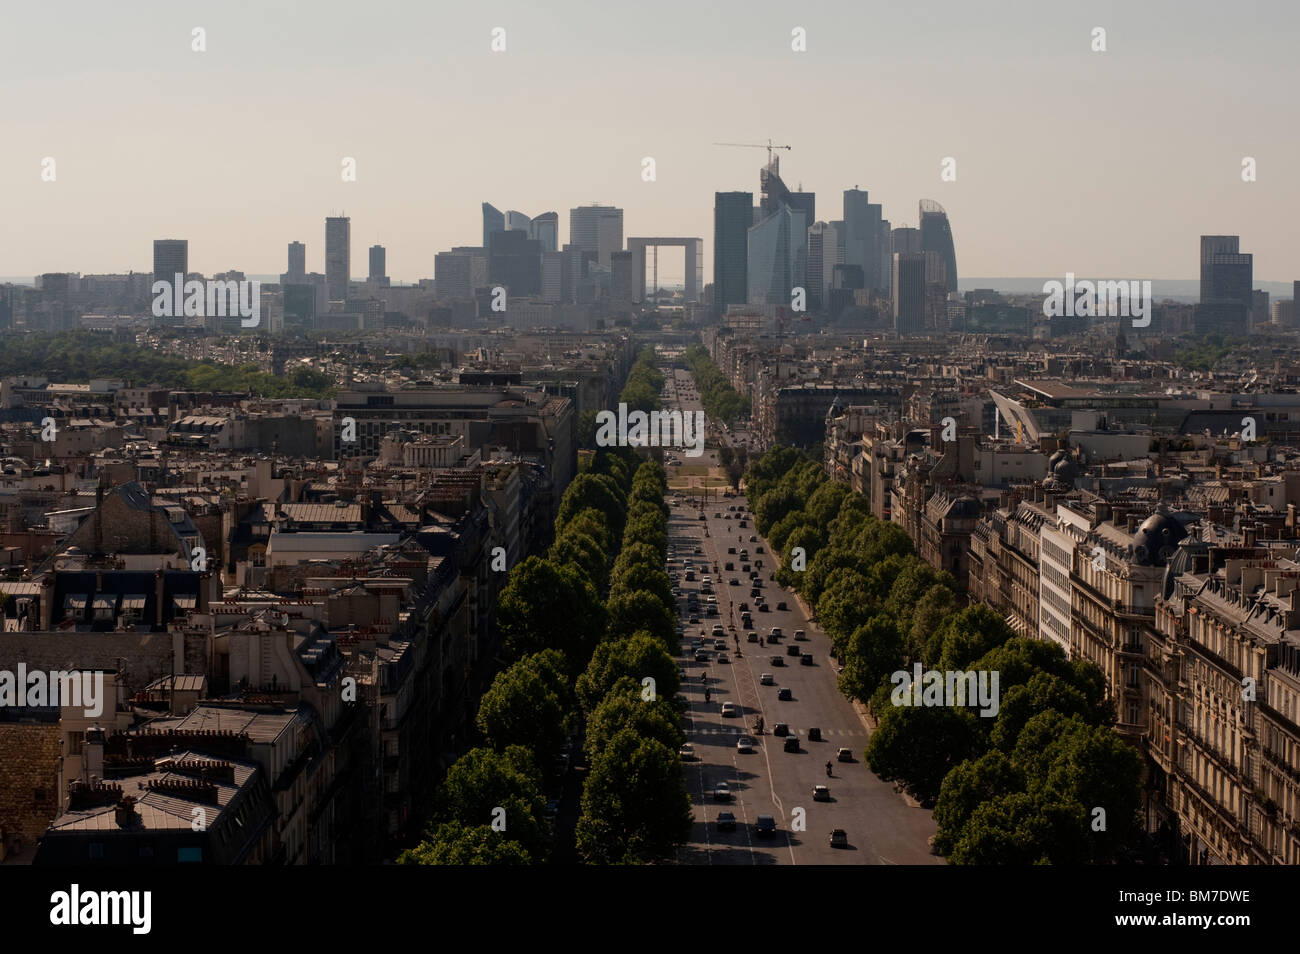 Skyline Paris, France, Cityscape, Aerial View from Arc de Triomphe, Looking West to La Defense Business Center, paris air pollution, city buildings Stock Photo